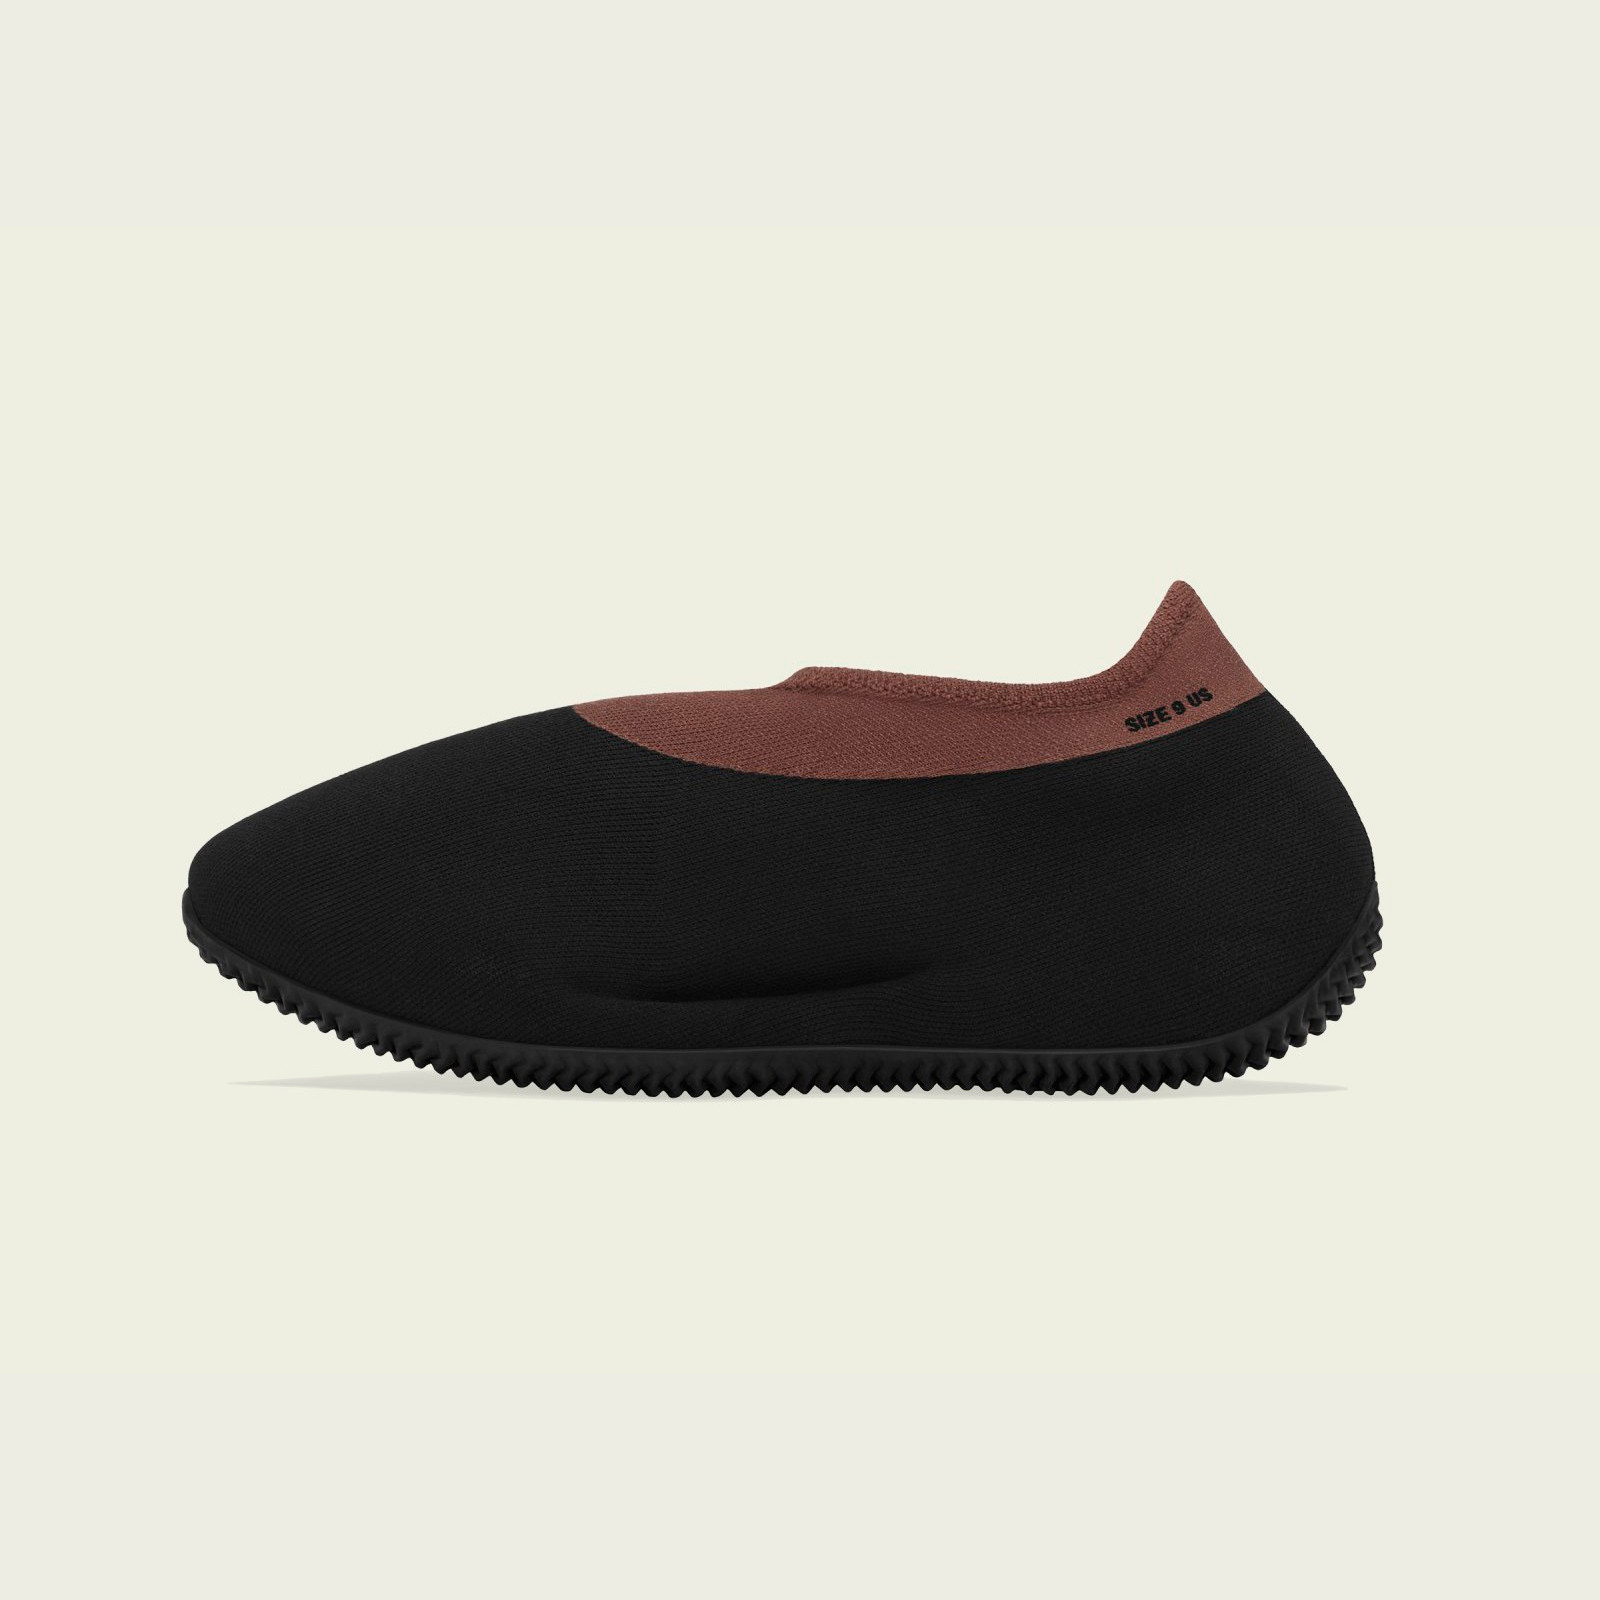 Adidas Yeezy Knit RNR
« Stone Carbon »